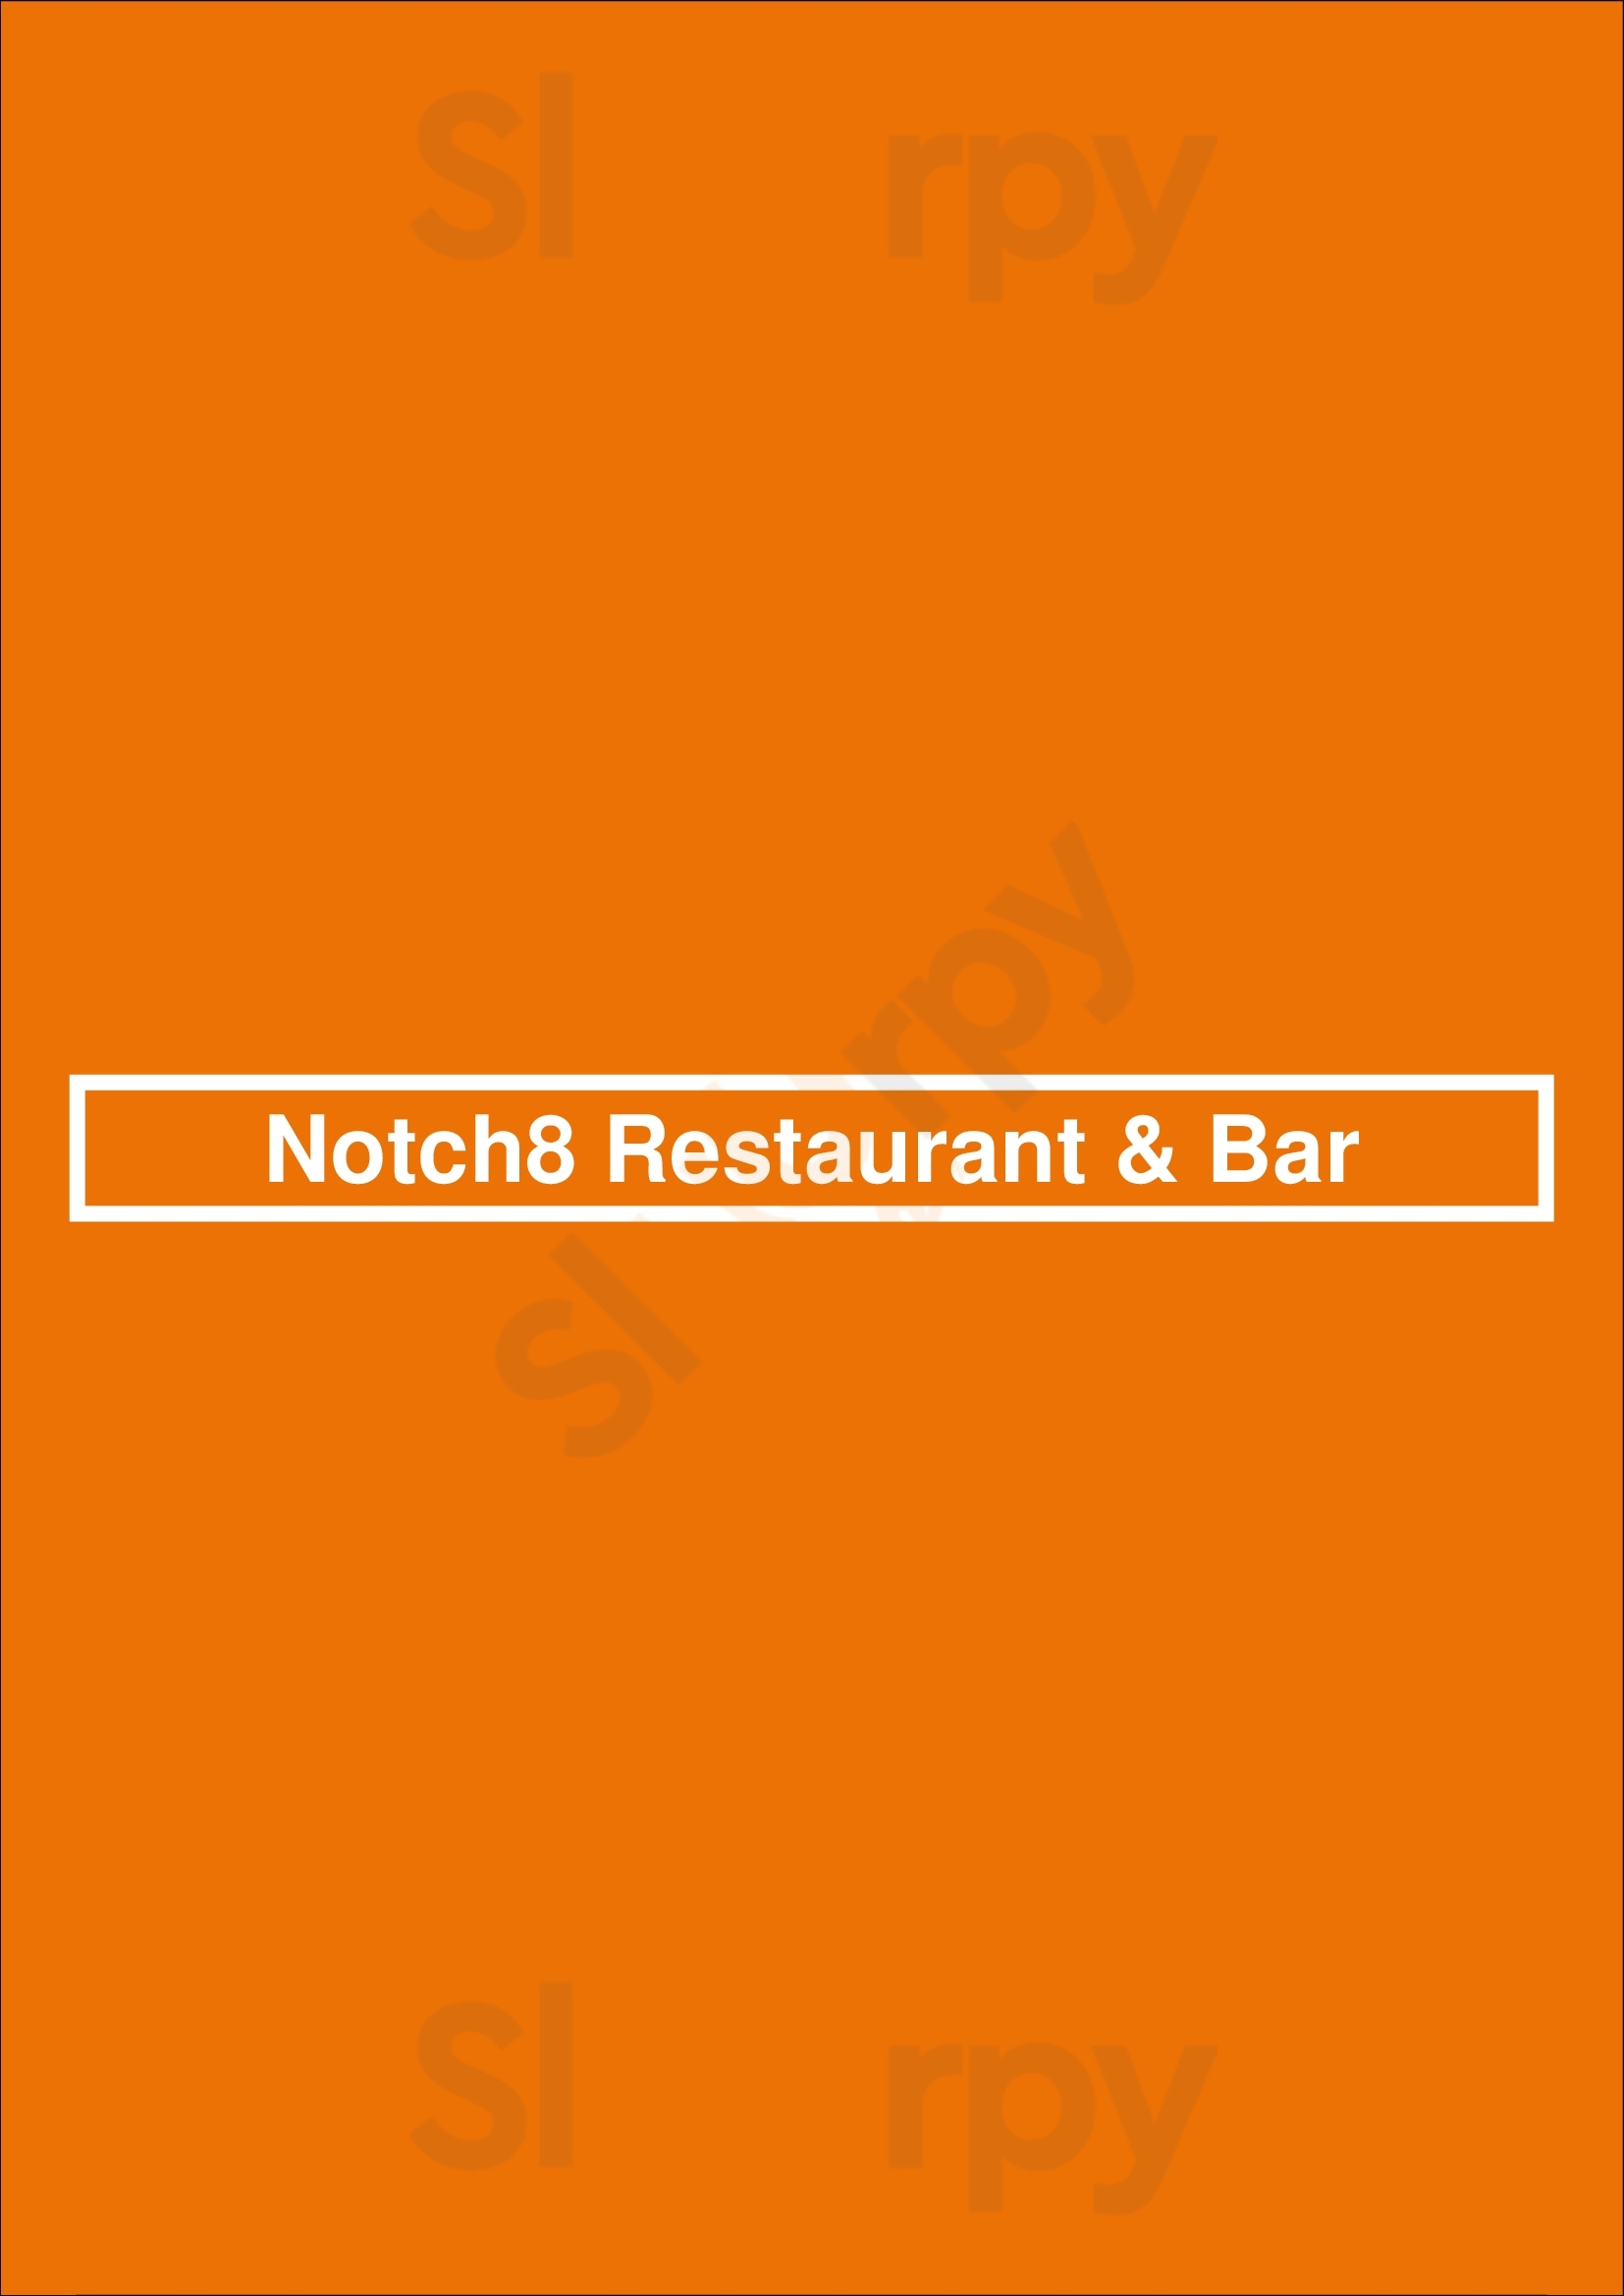 Notch8 Restaurant & Bar Vancouver Menu - 1